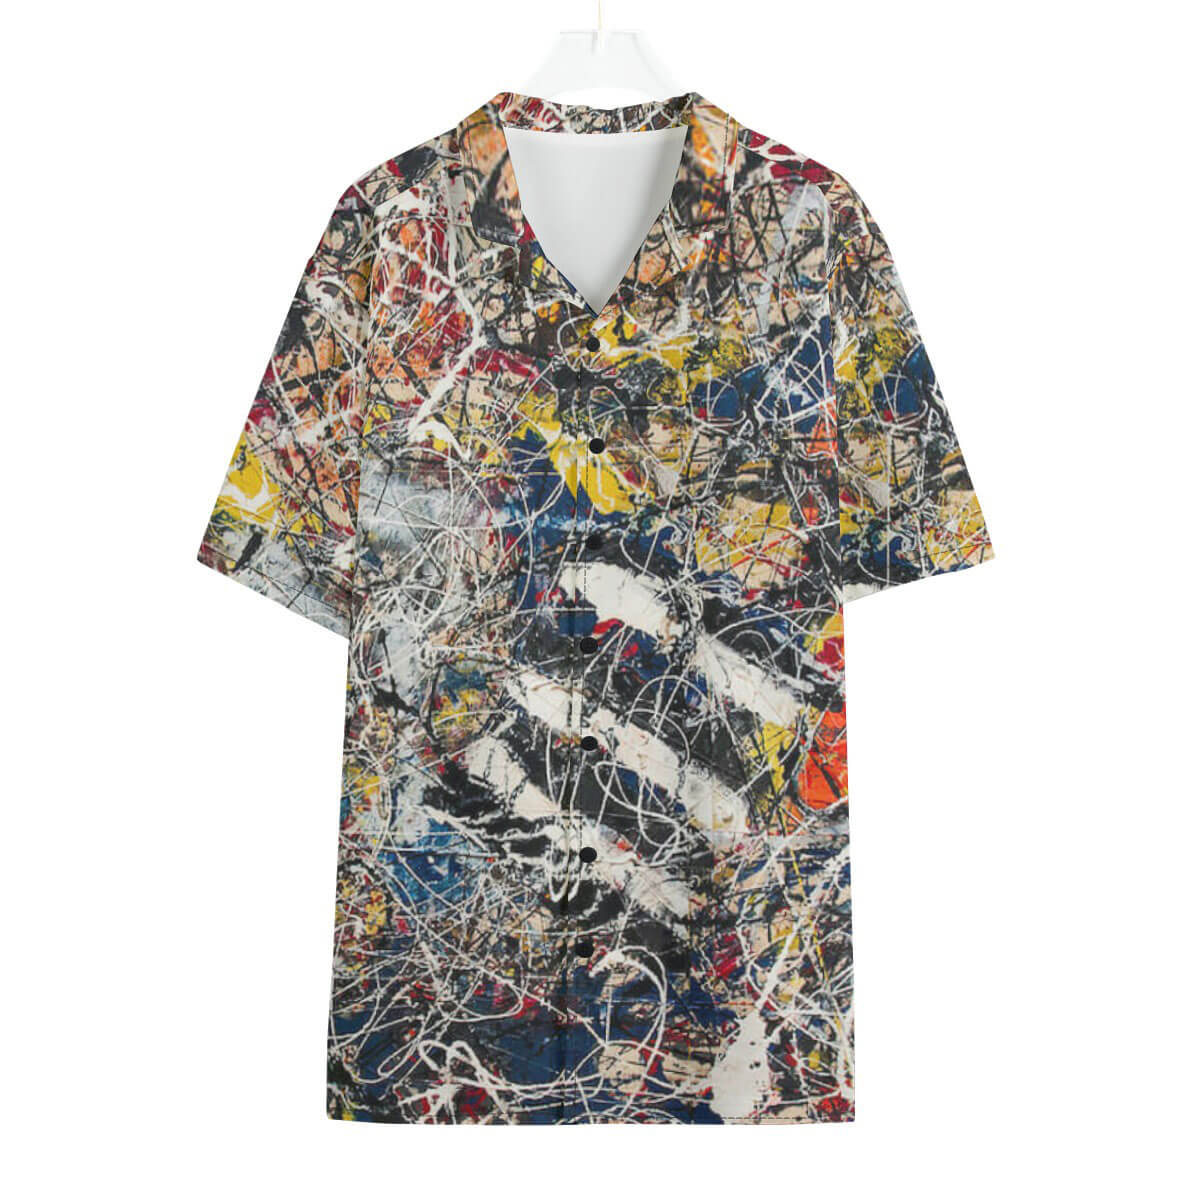 Pollock Paradise Hawaiian Shirt vibrant abstract art print